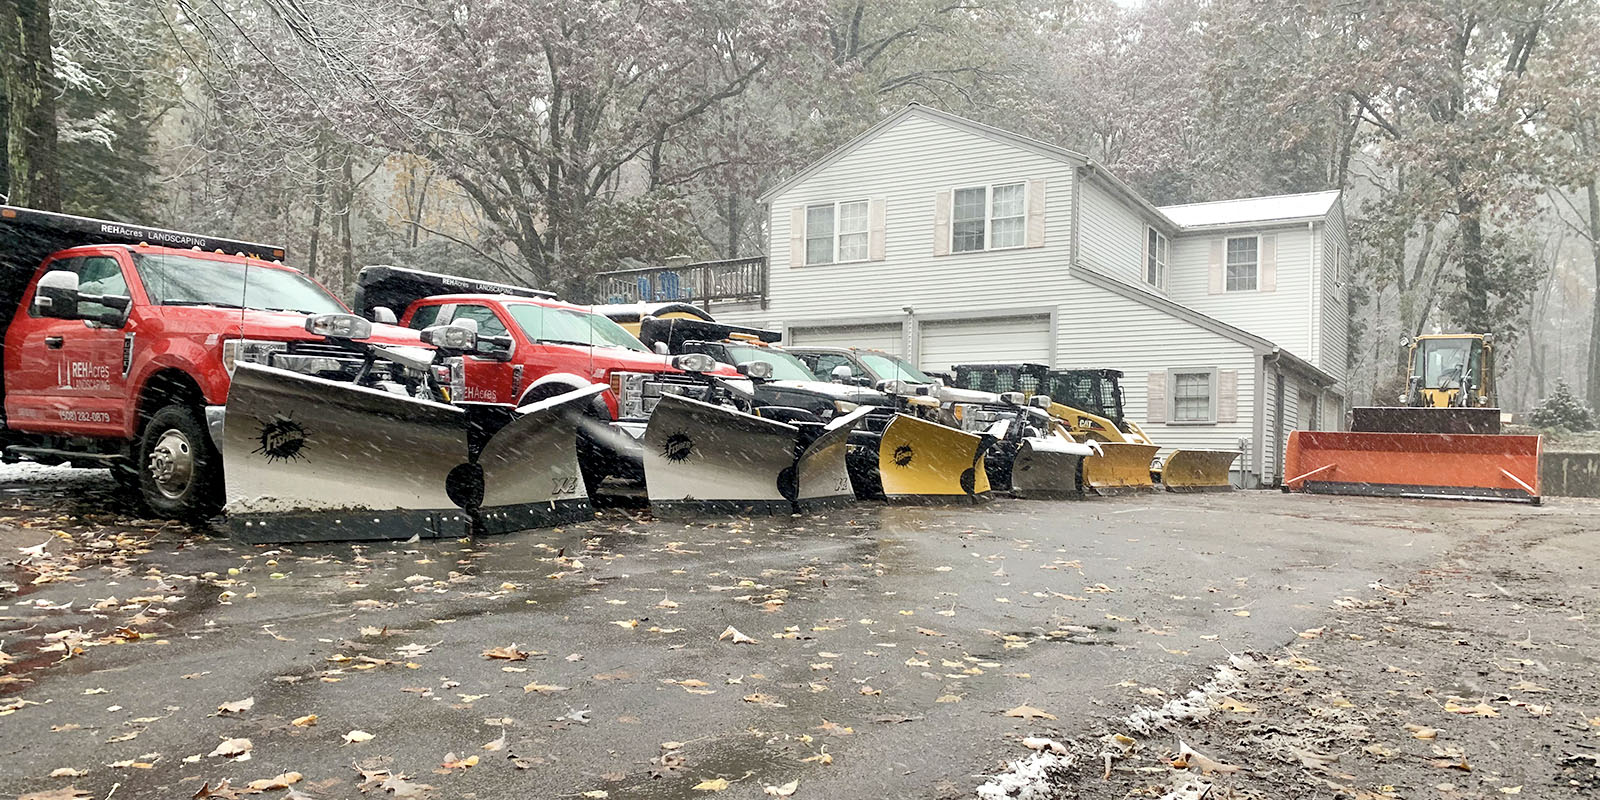 Our fleet of snowplows